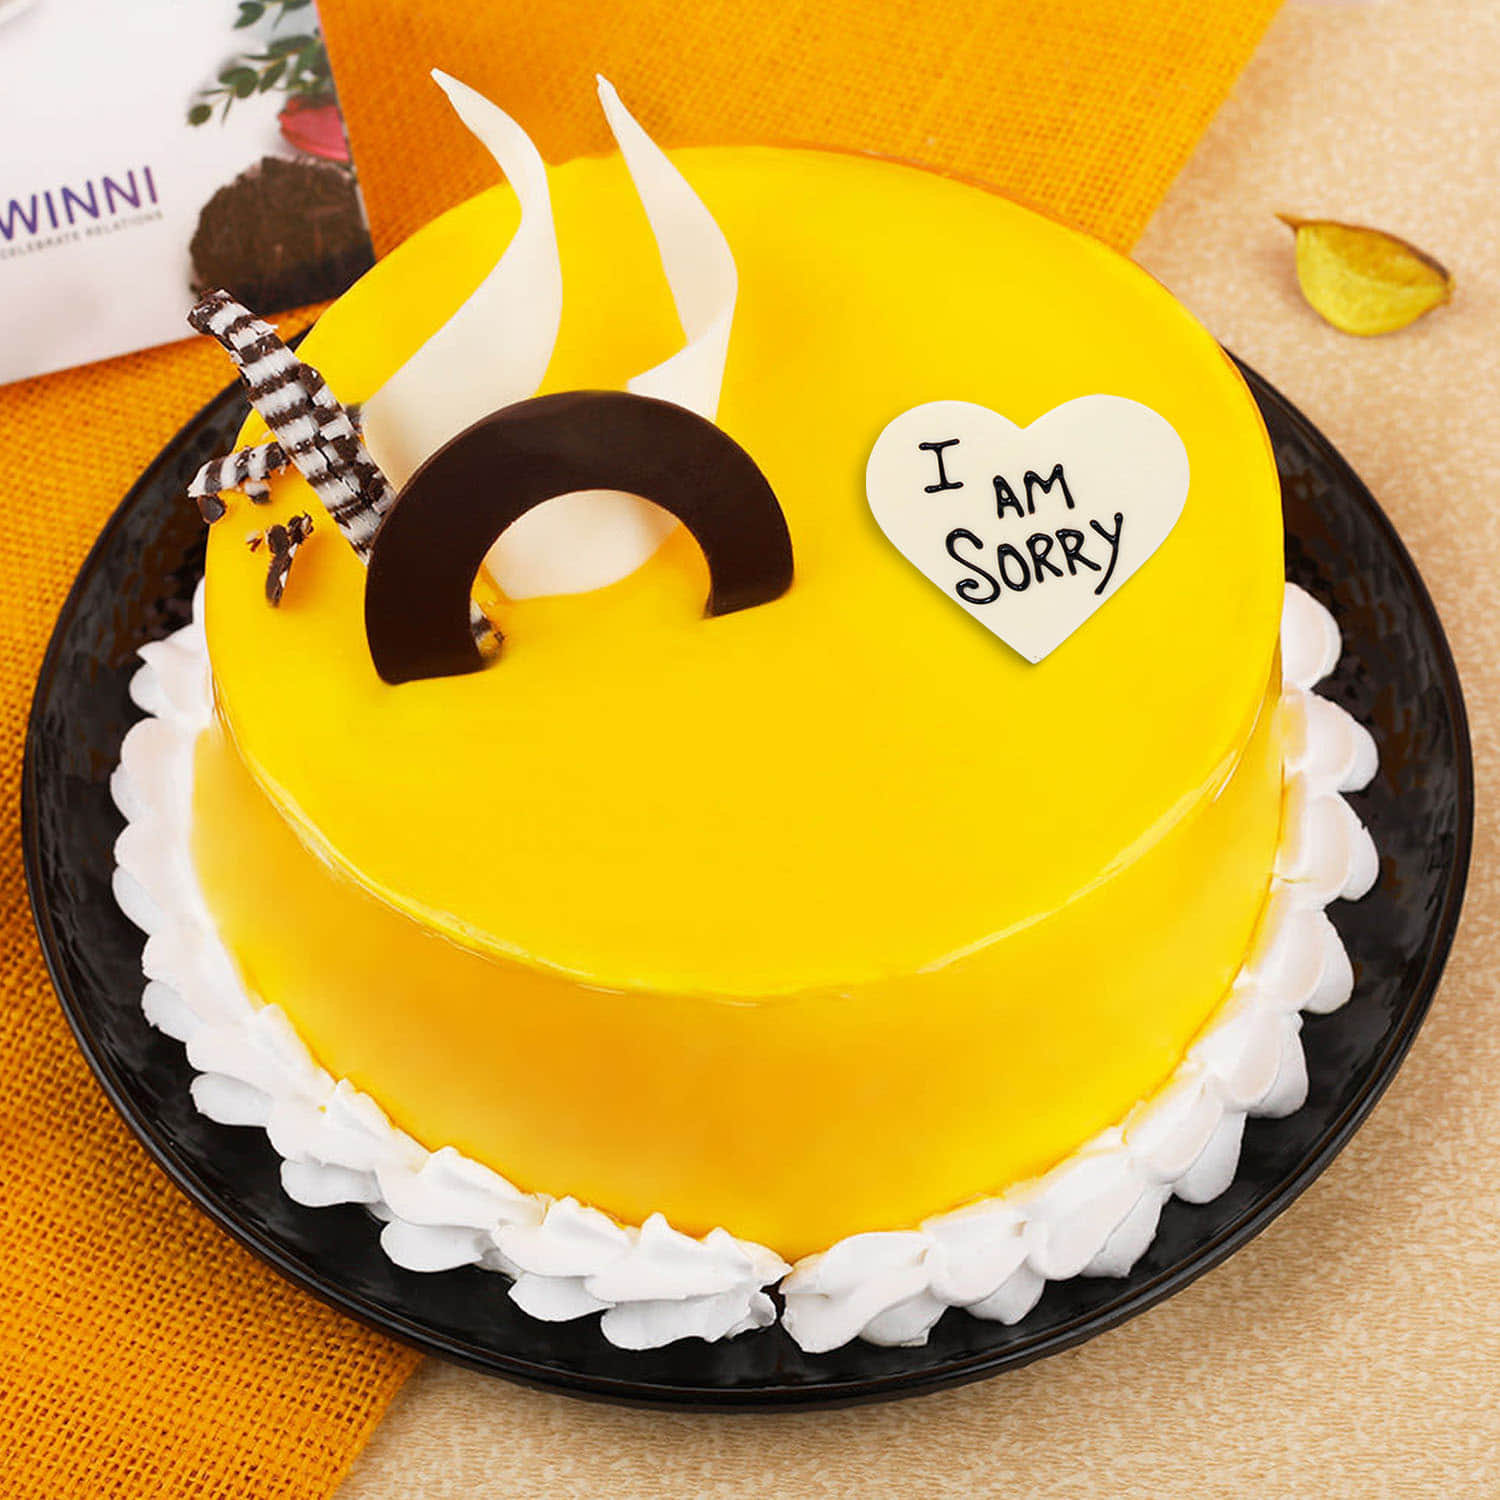 Sorry Plz Forgive Me Name Write Cake Pictures Online | Unique birthday cakes,  Heart birthday cake, Birthday cake